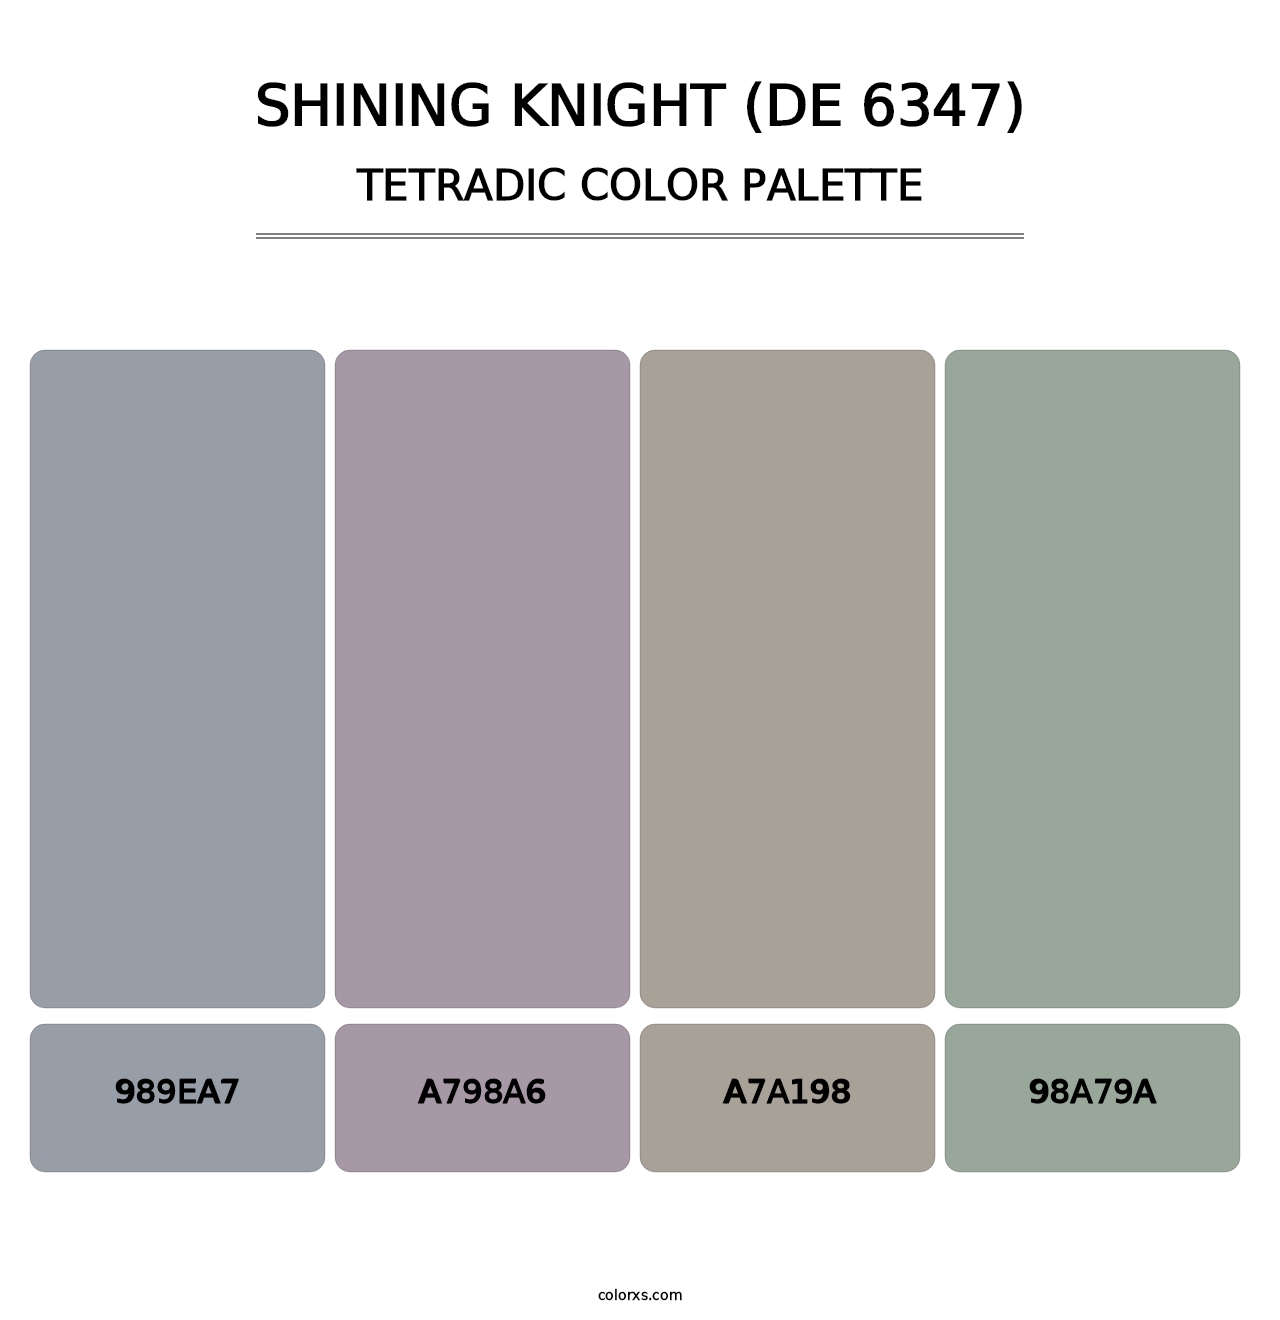 Shining Knight (DE 6347) - Tetradic Color Palette